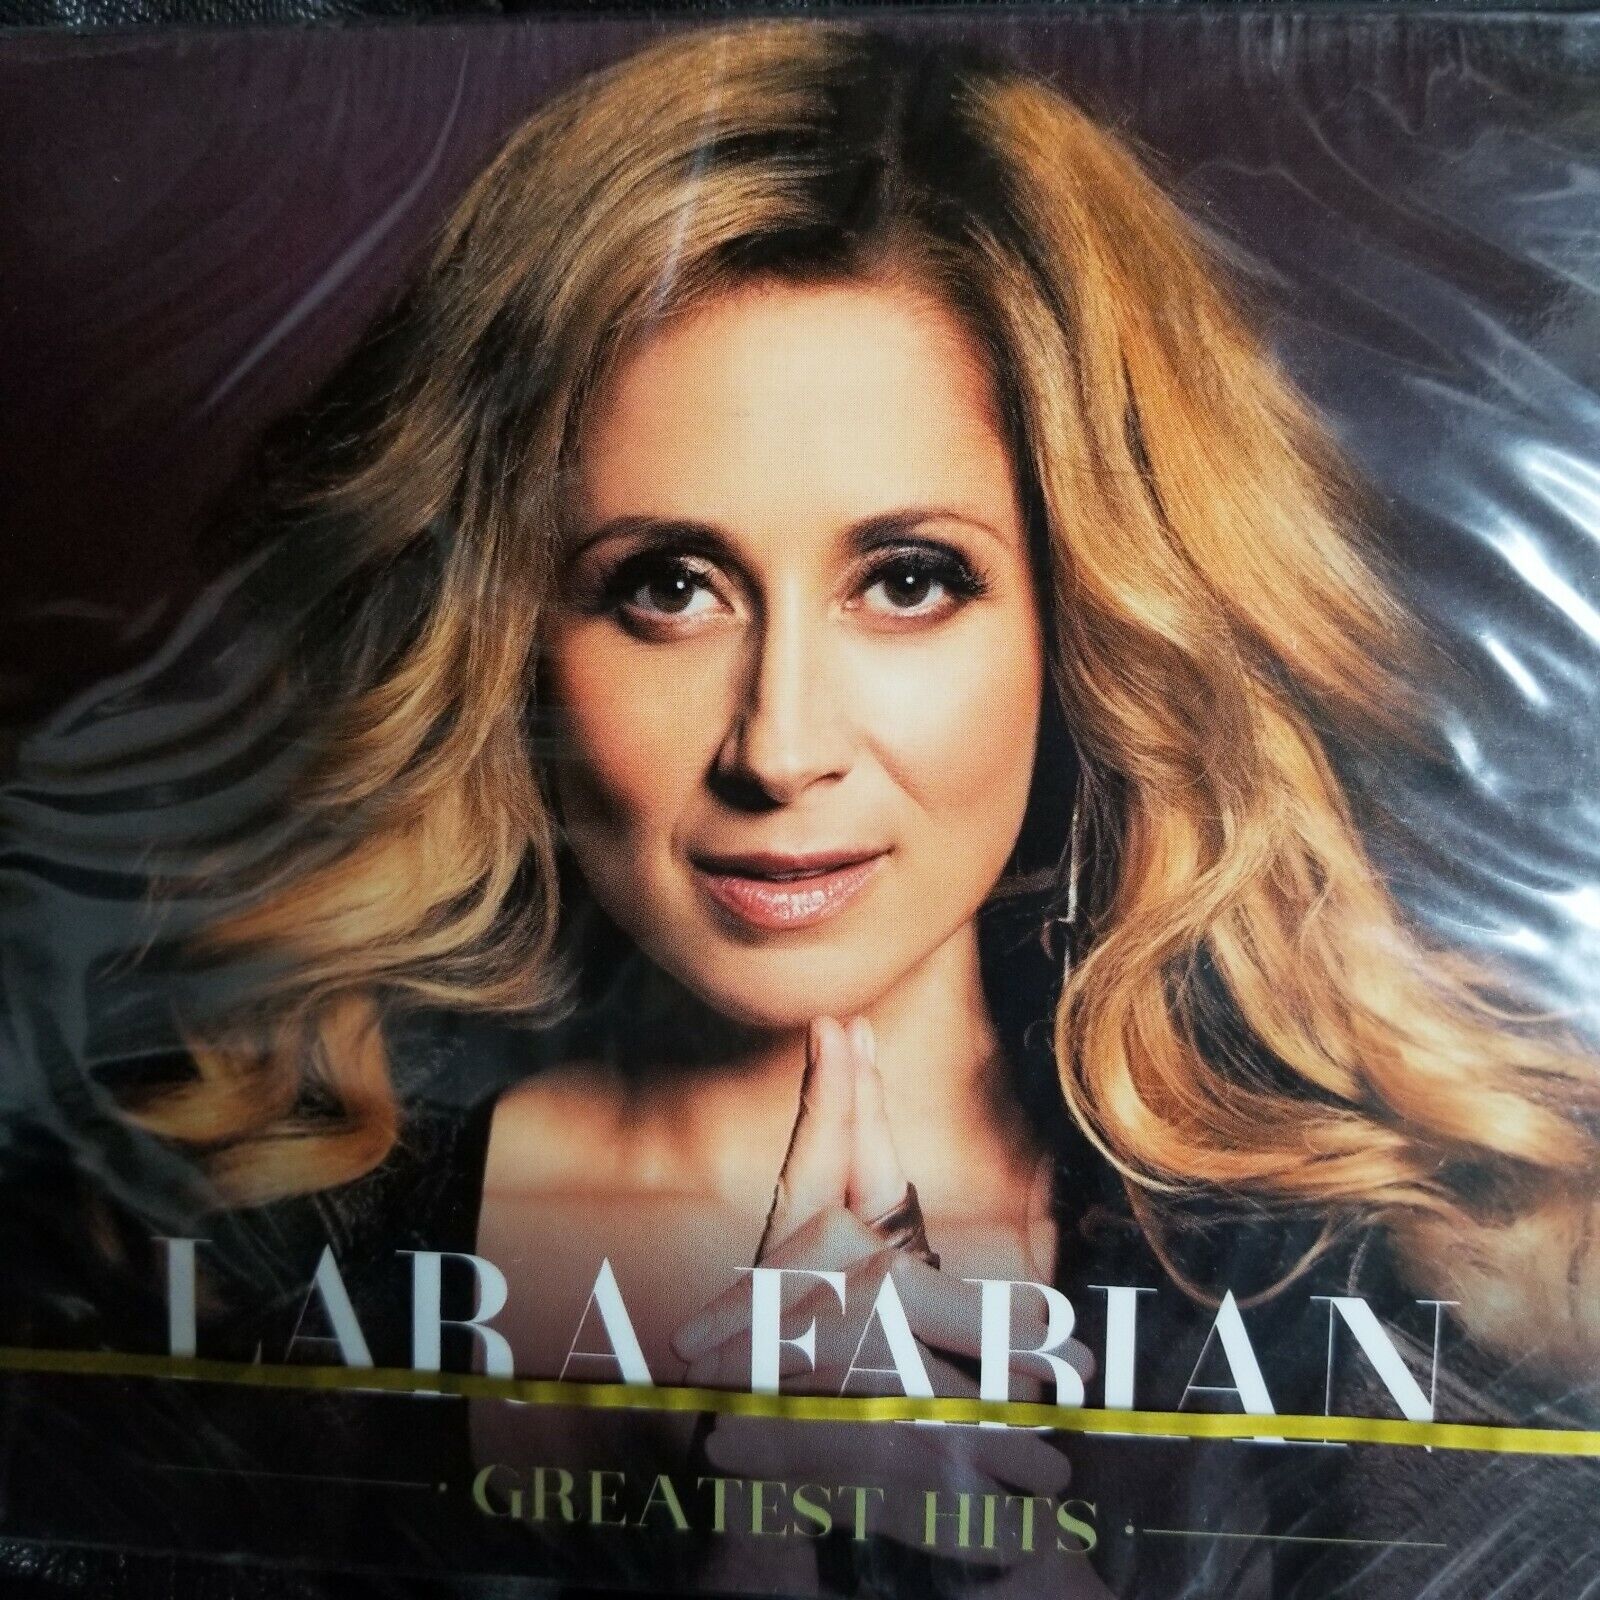 Lara Fabian Greatest hits 2 CD set NEW